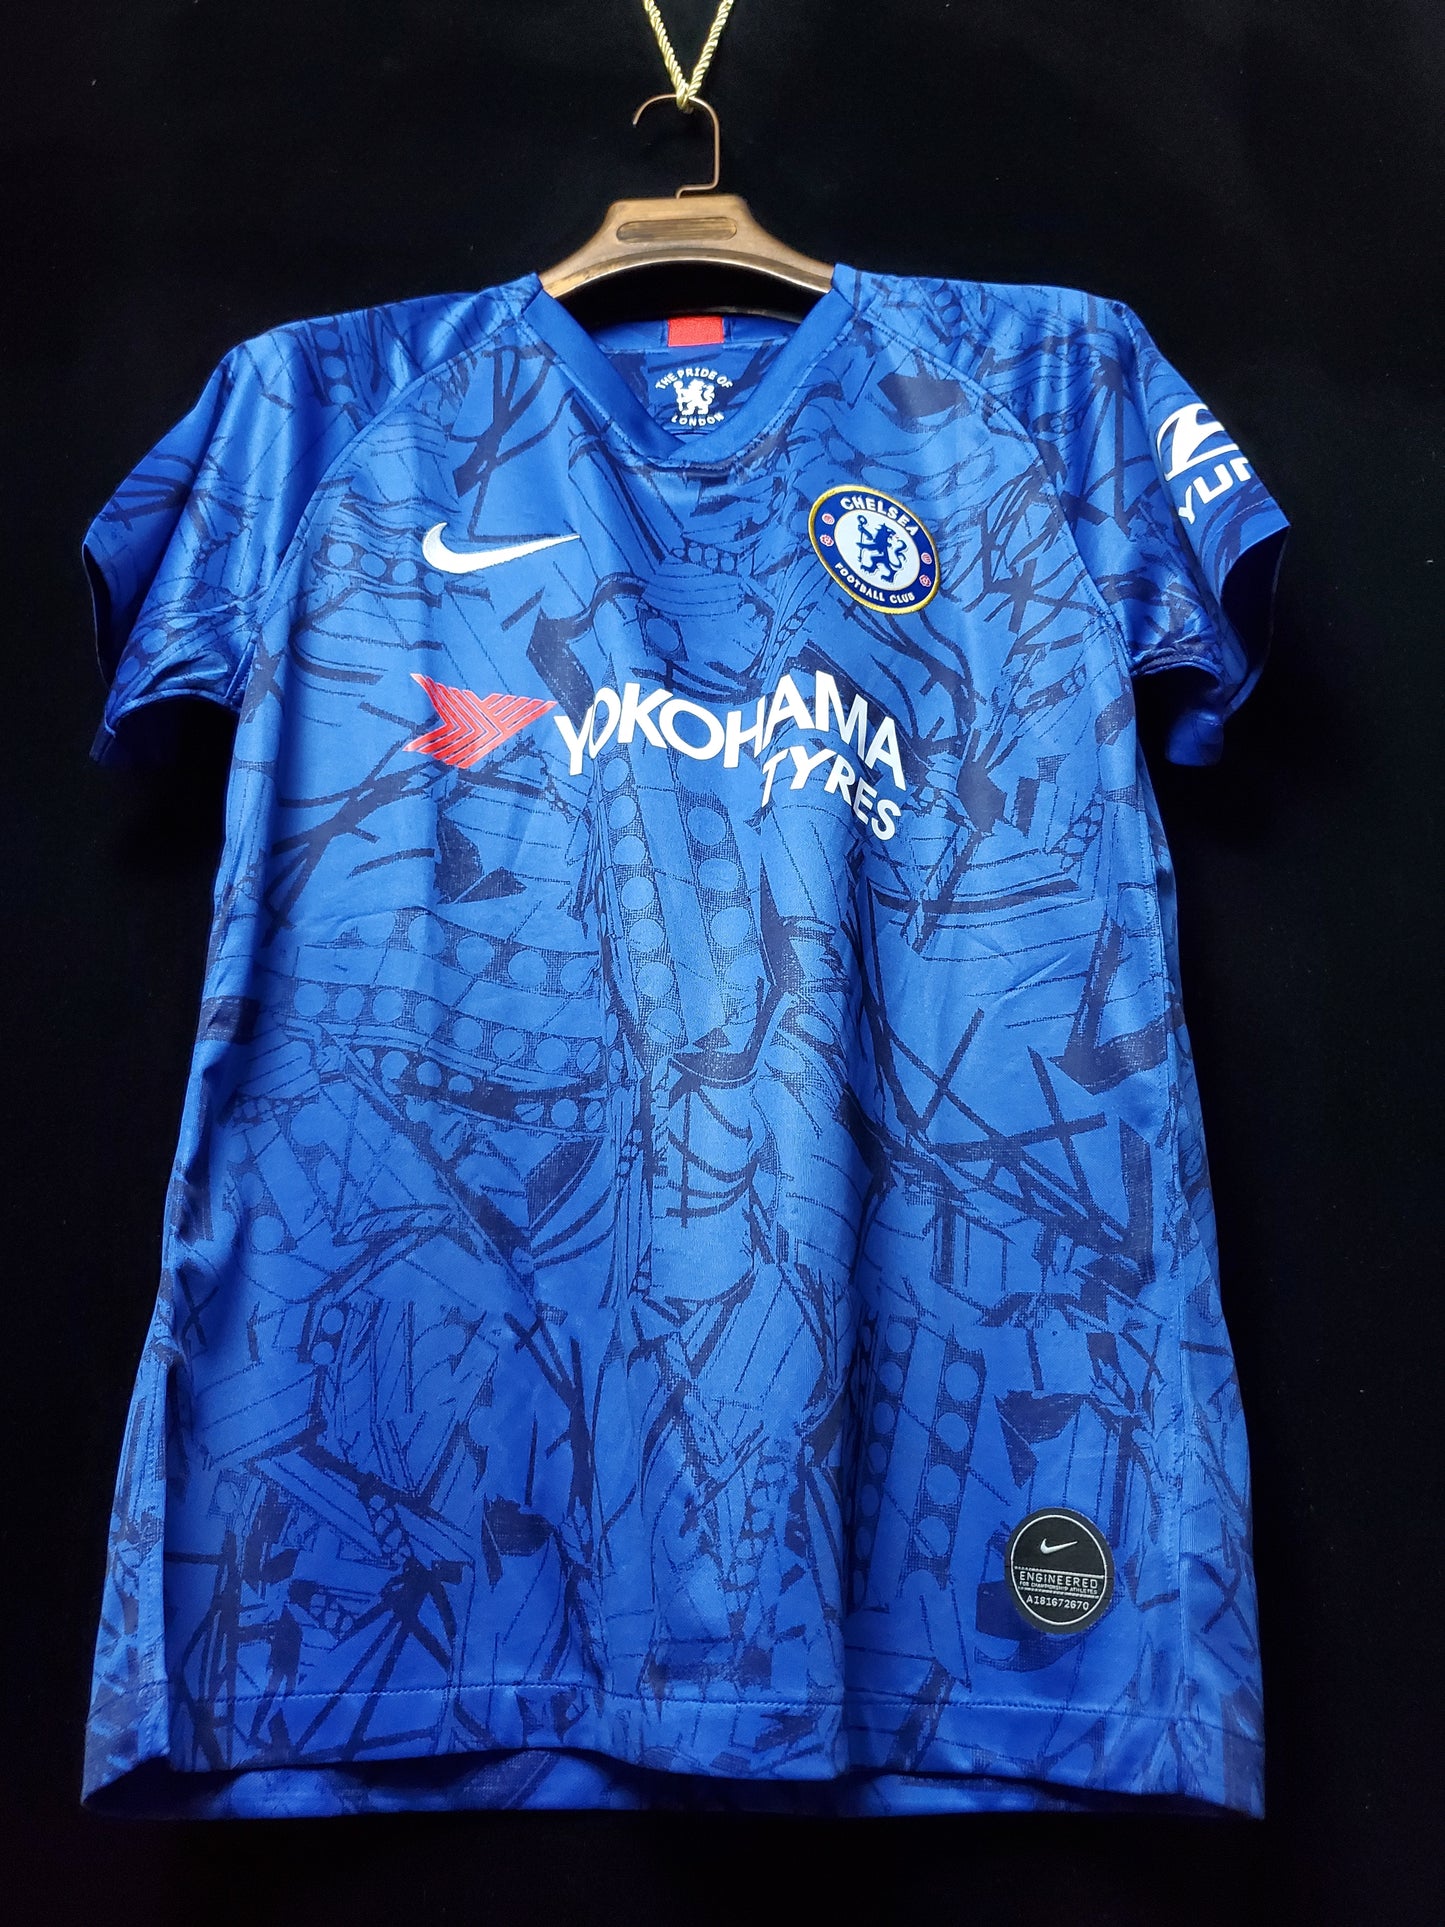 Retro Chelsea 19/20 Home Kit